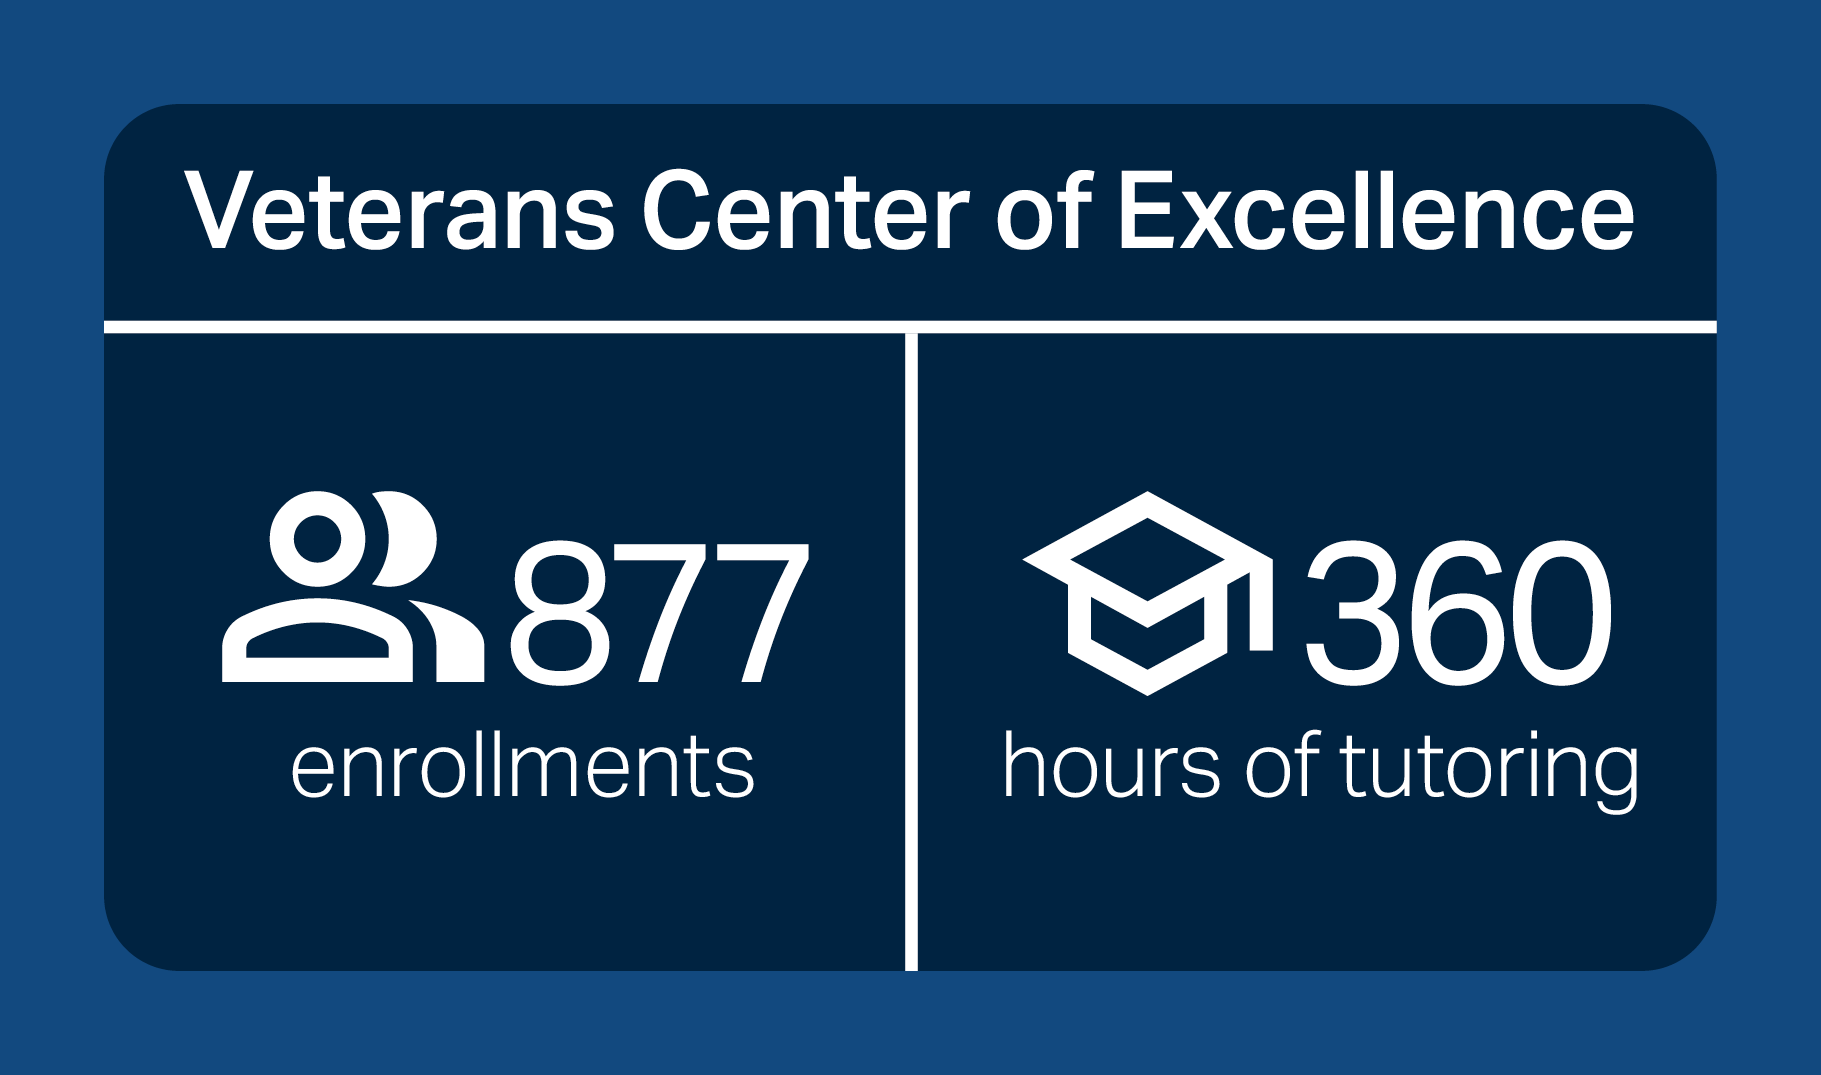 Veteran center of excellence 877 enrollments 360 hours of tutoring